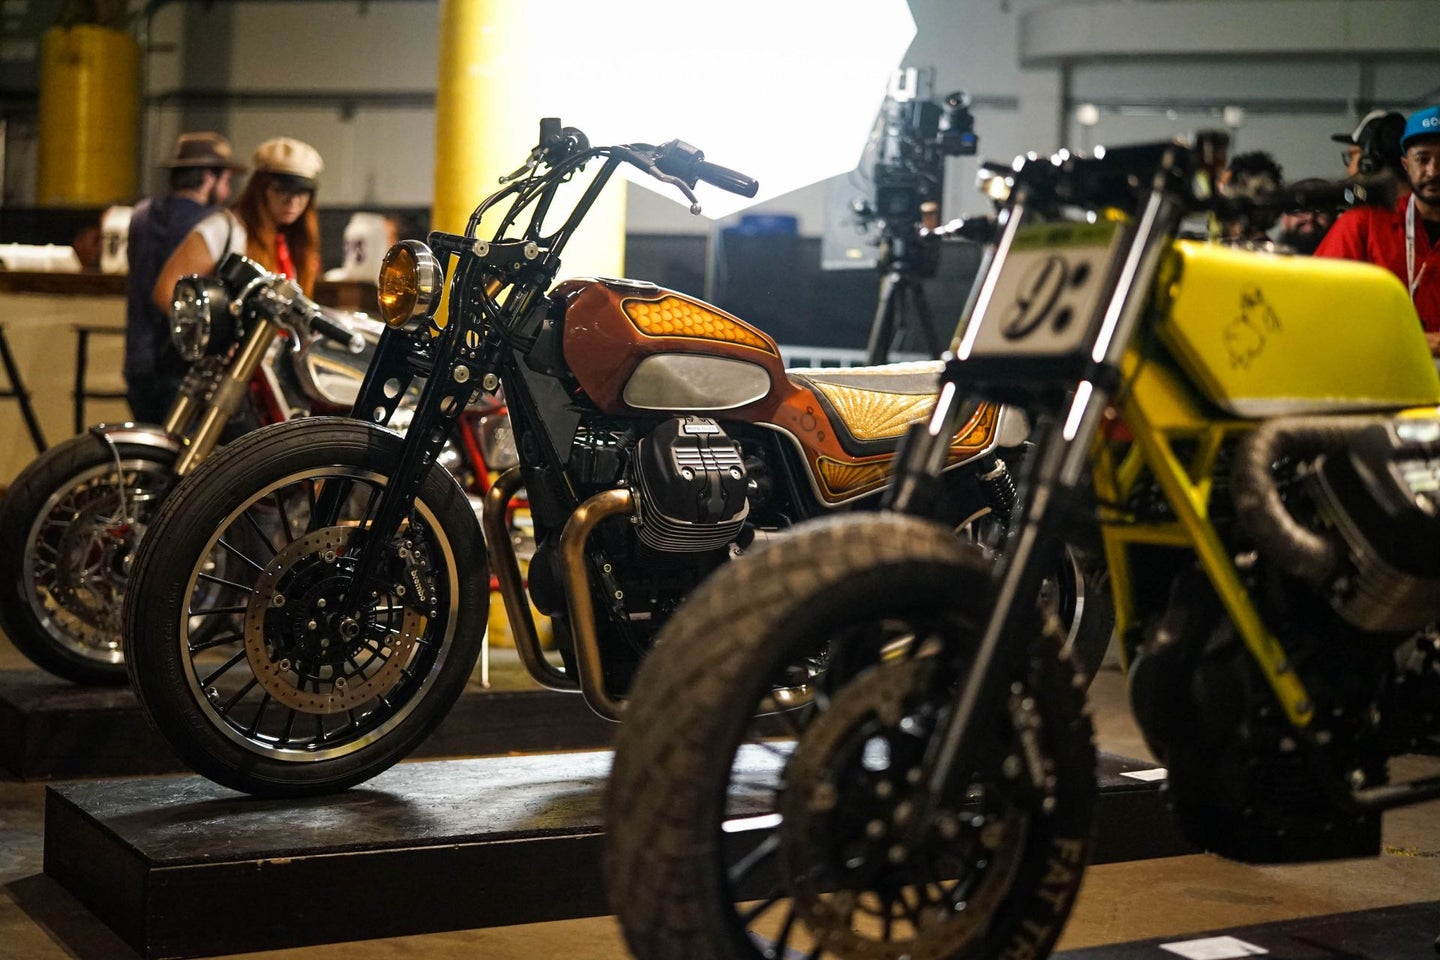 Custom Built Moto Guzzi V9 by Revival Cycles Revealed at the Handbuilt Show